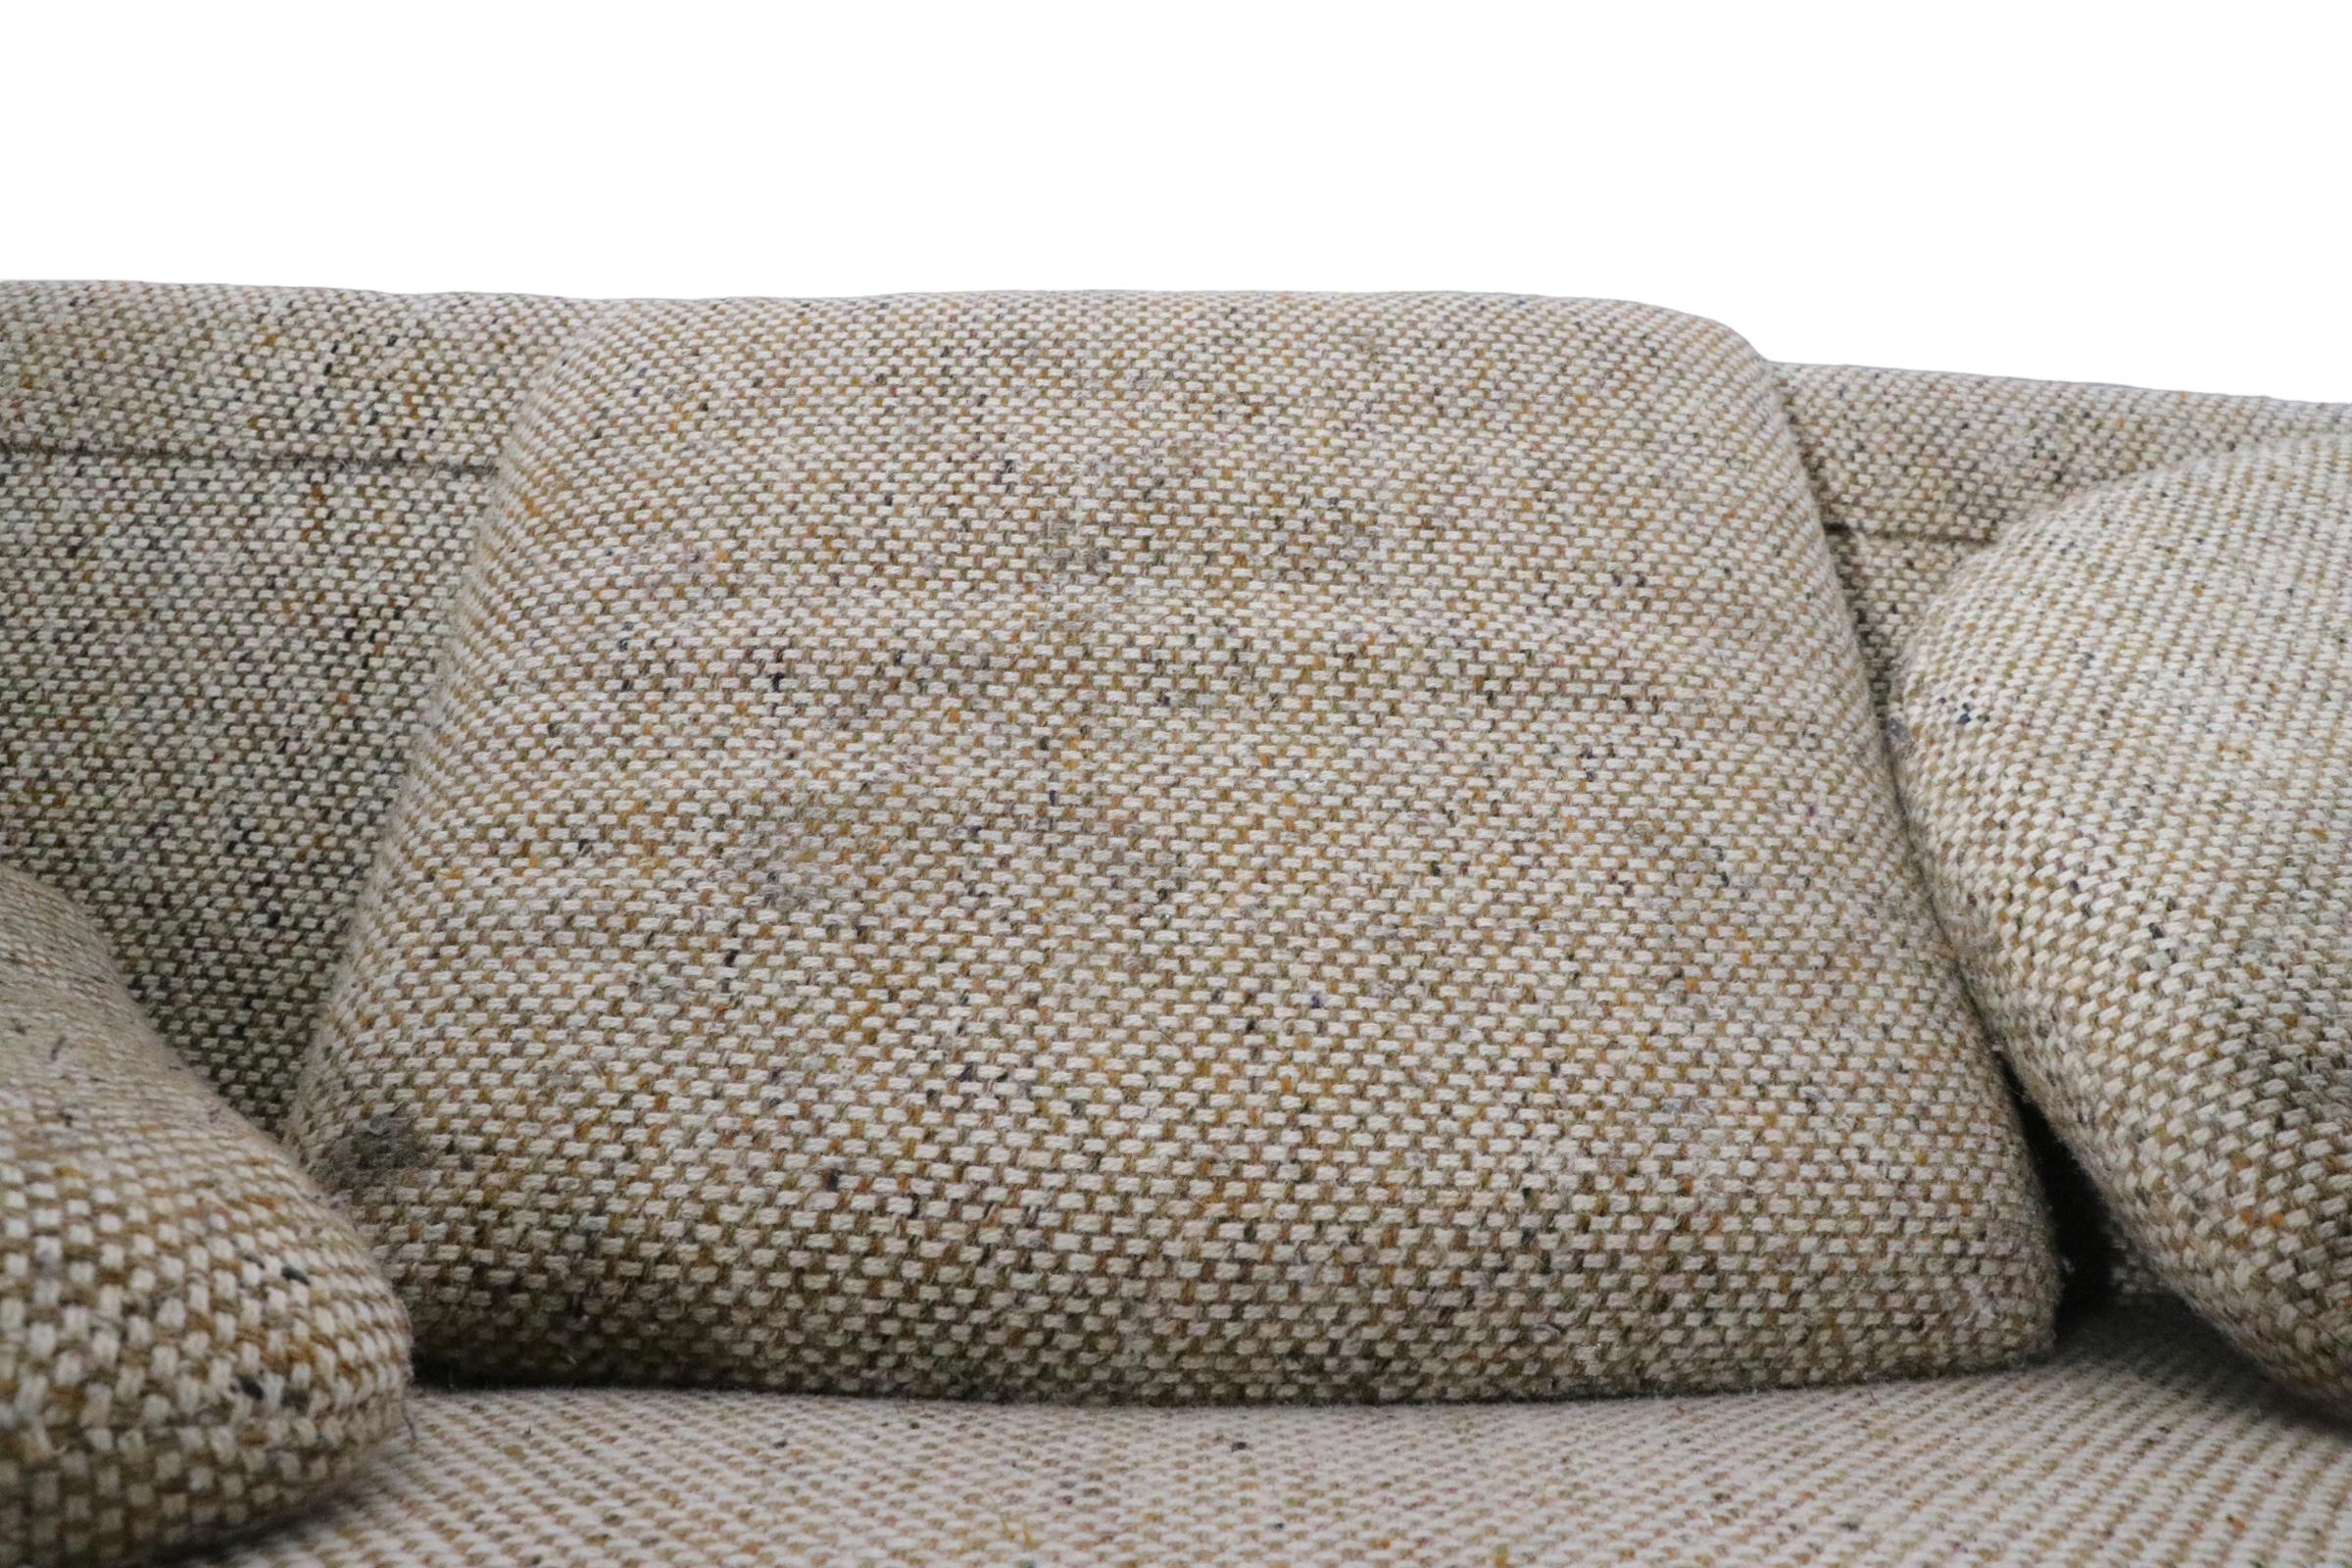 American Mod Pod Sofa by Overman in Original Tweed Fabric, circa 1960s - 1970s